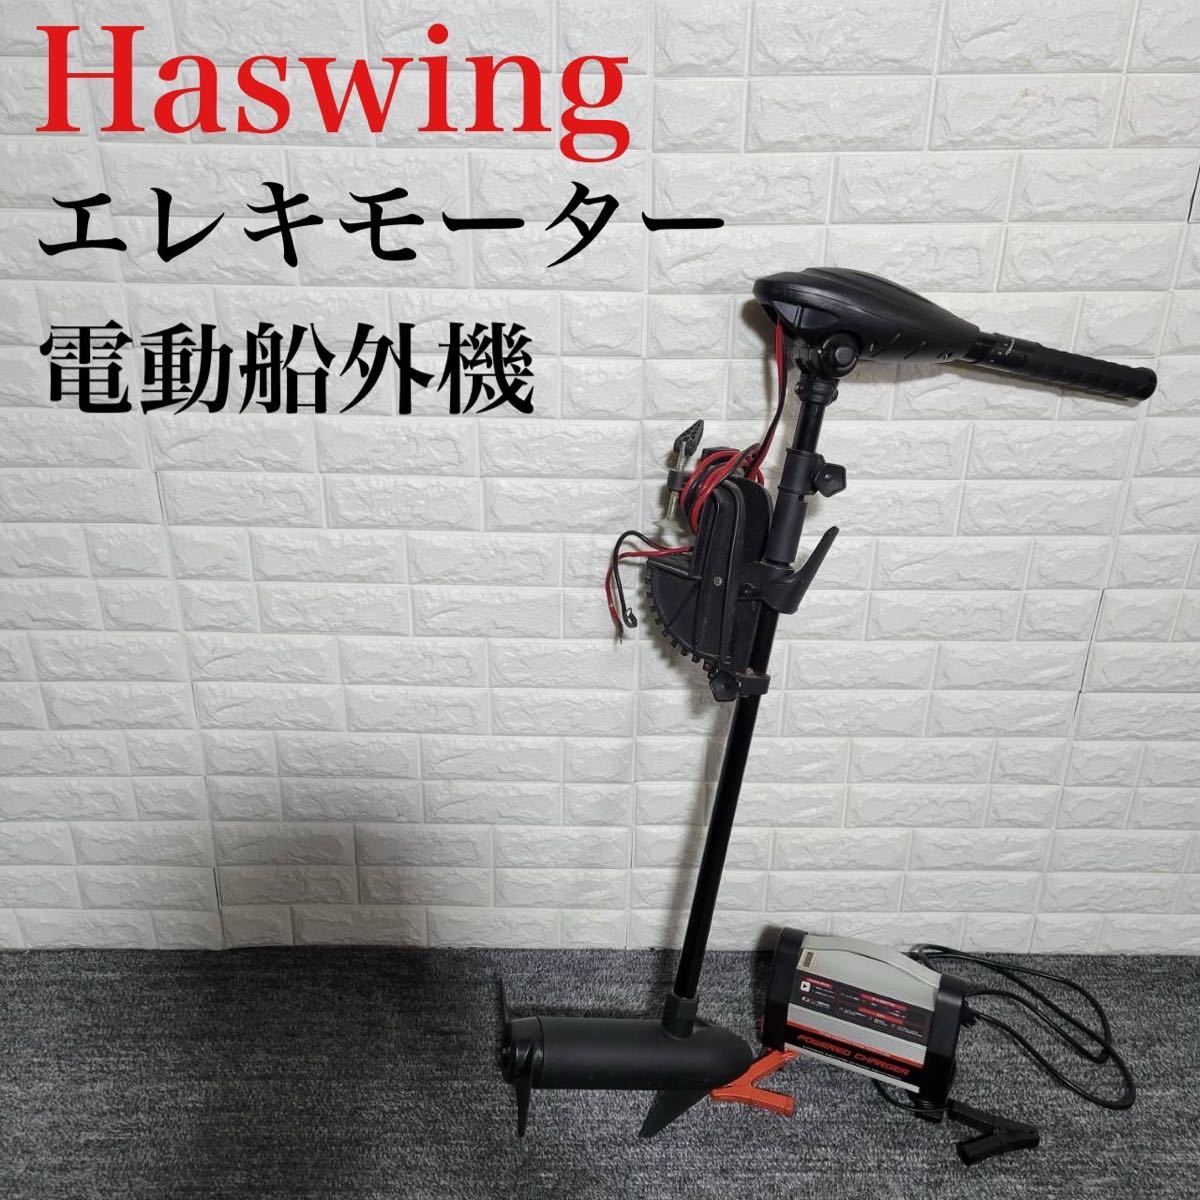 Haswing 電動船外機 エレキモーター PG-PP-SMC1204 M0674